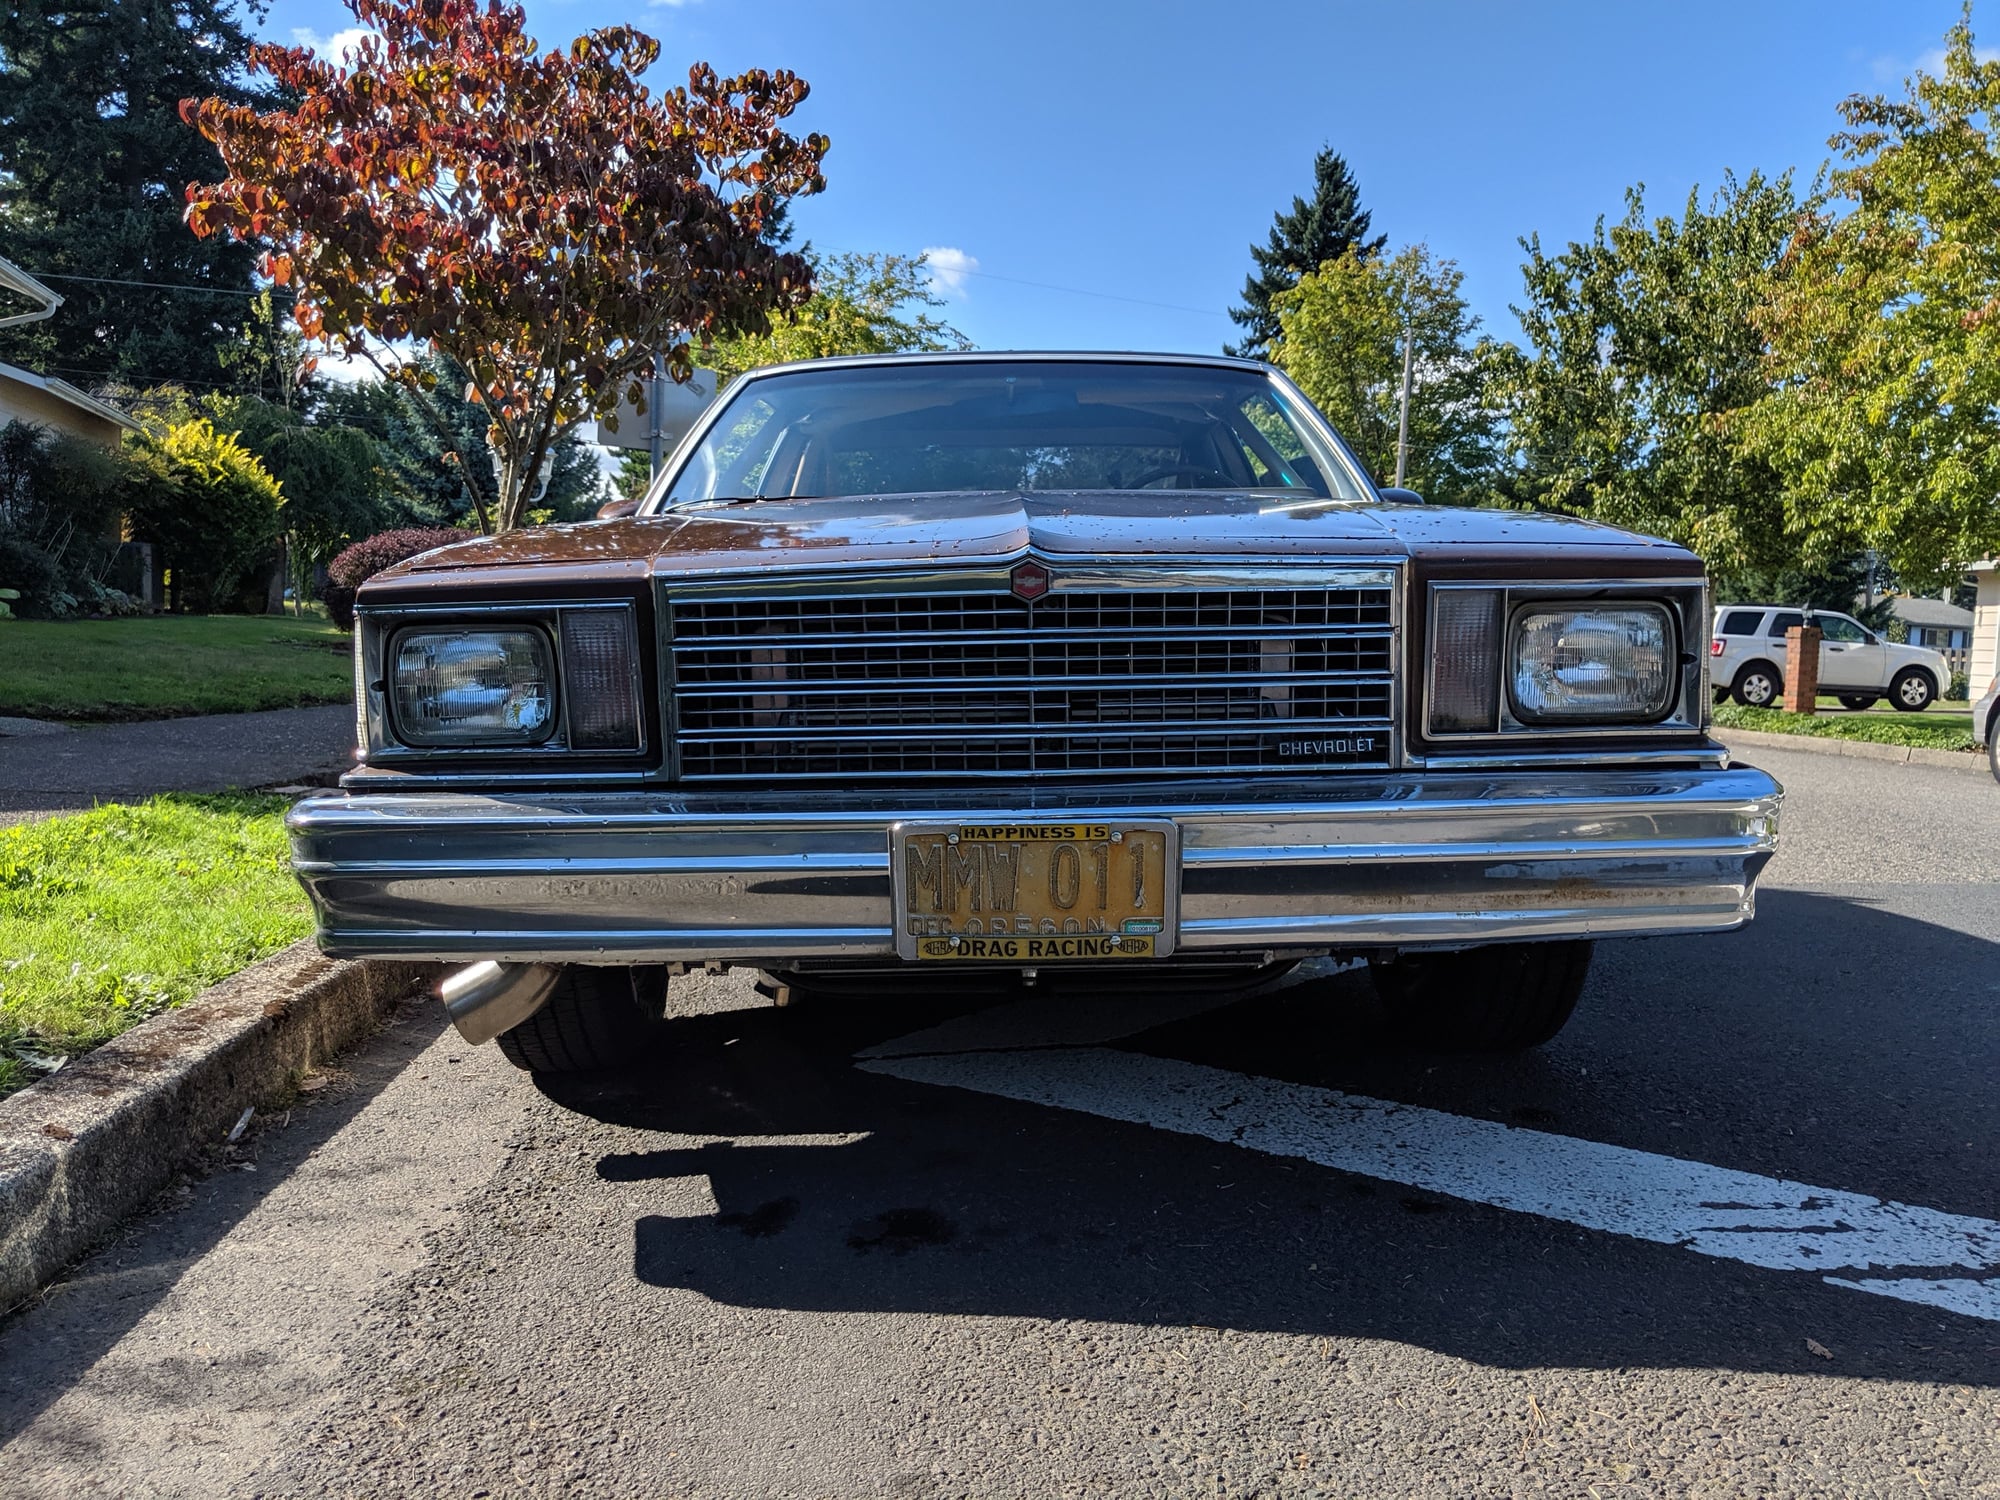 1979 Chevrolet Malibu - turbo g body malibu street/strip car - Used - VIN 1t27m9z458953 - 8 cyl - 2WD - Automatic - Coupe - Brown - Portland, OR 97220, United States